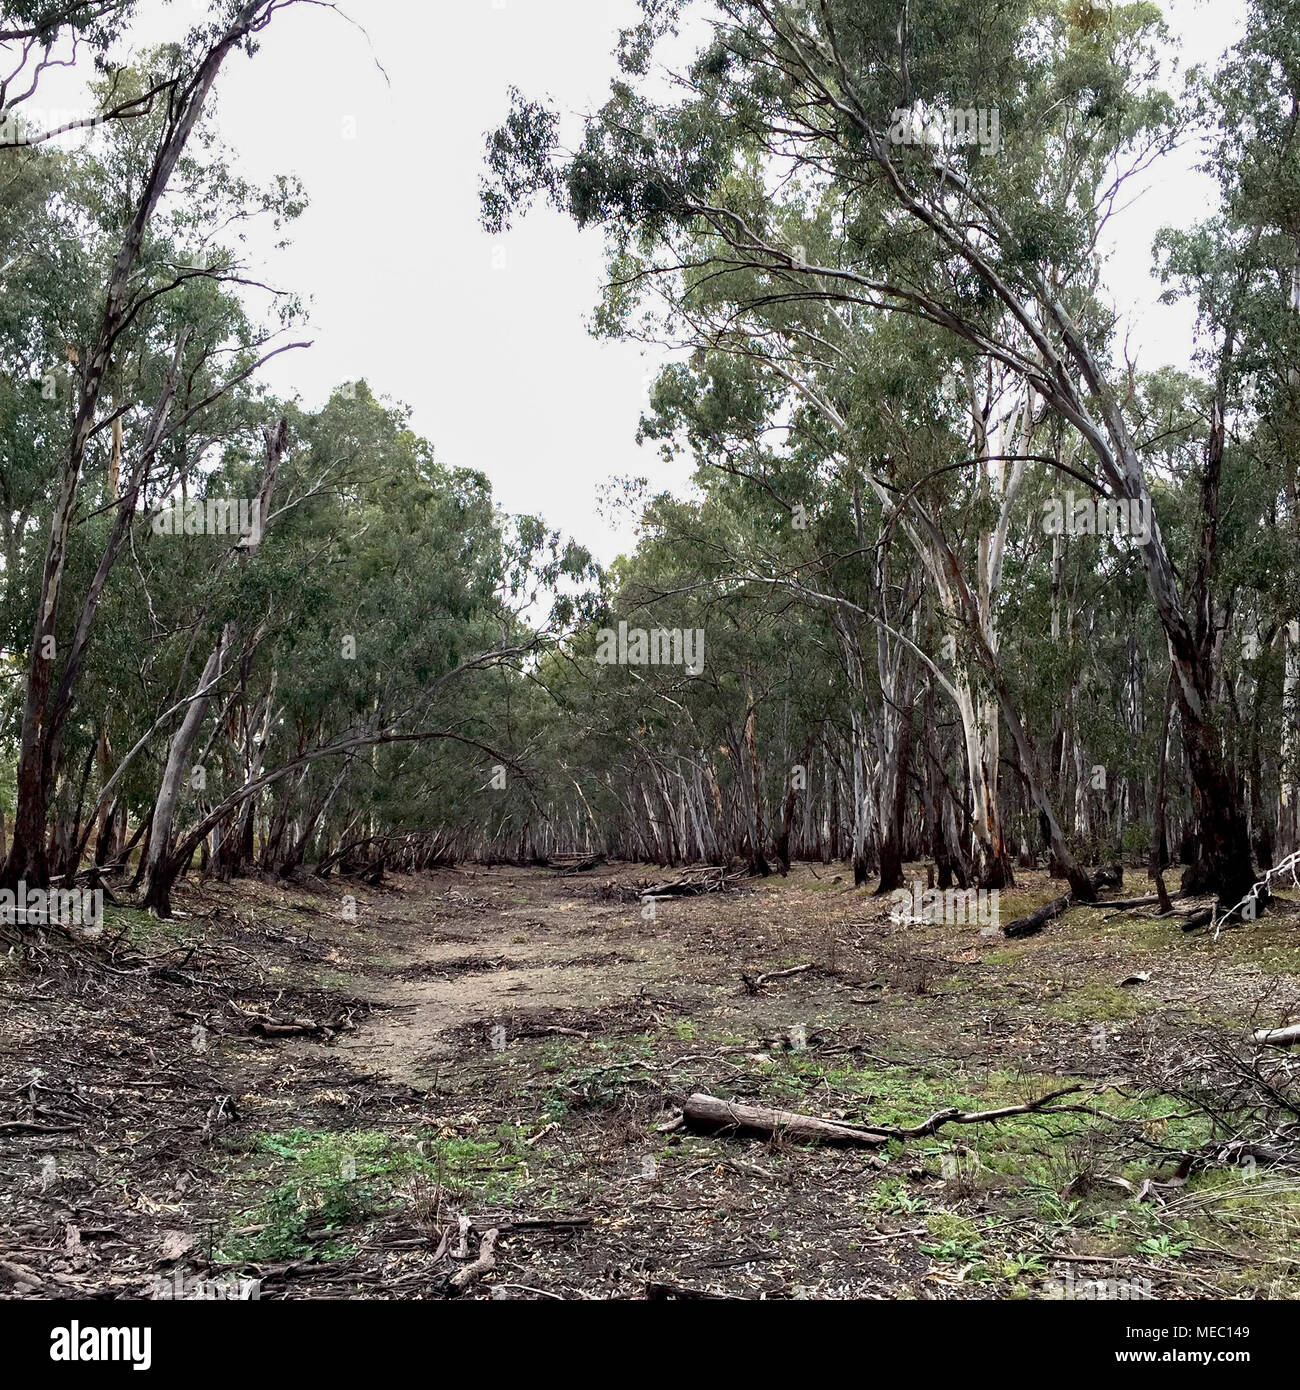 Dry Creek Bed bordeada de árboles de eucalipto en las zonas rurales, NSW. Australianas bush paisaje. Foto de stock